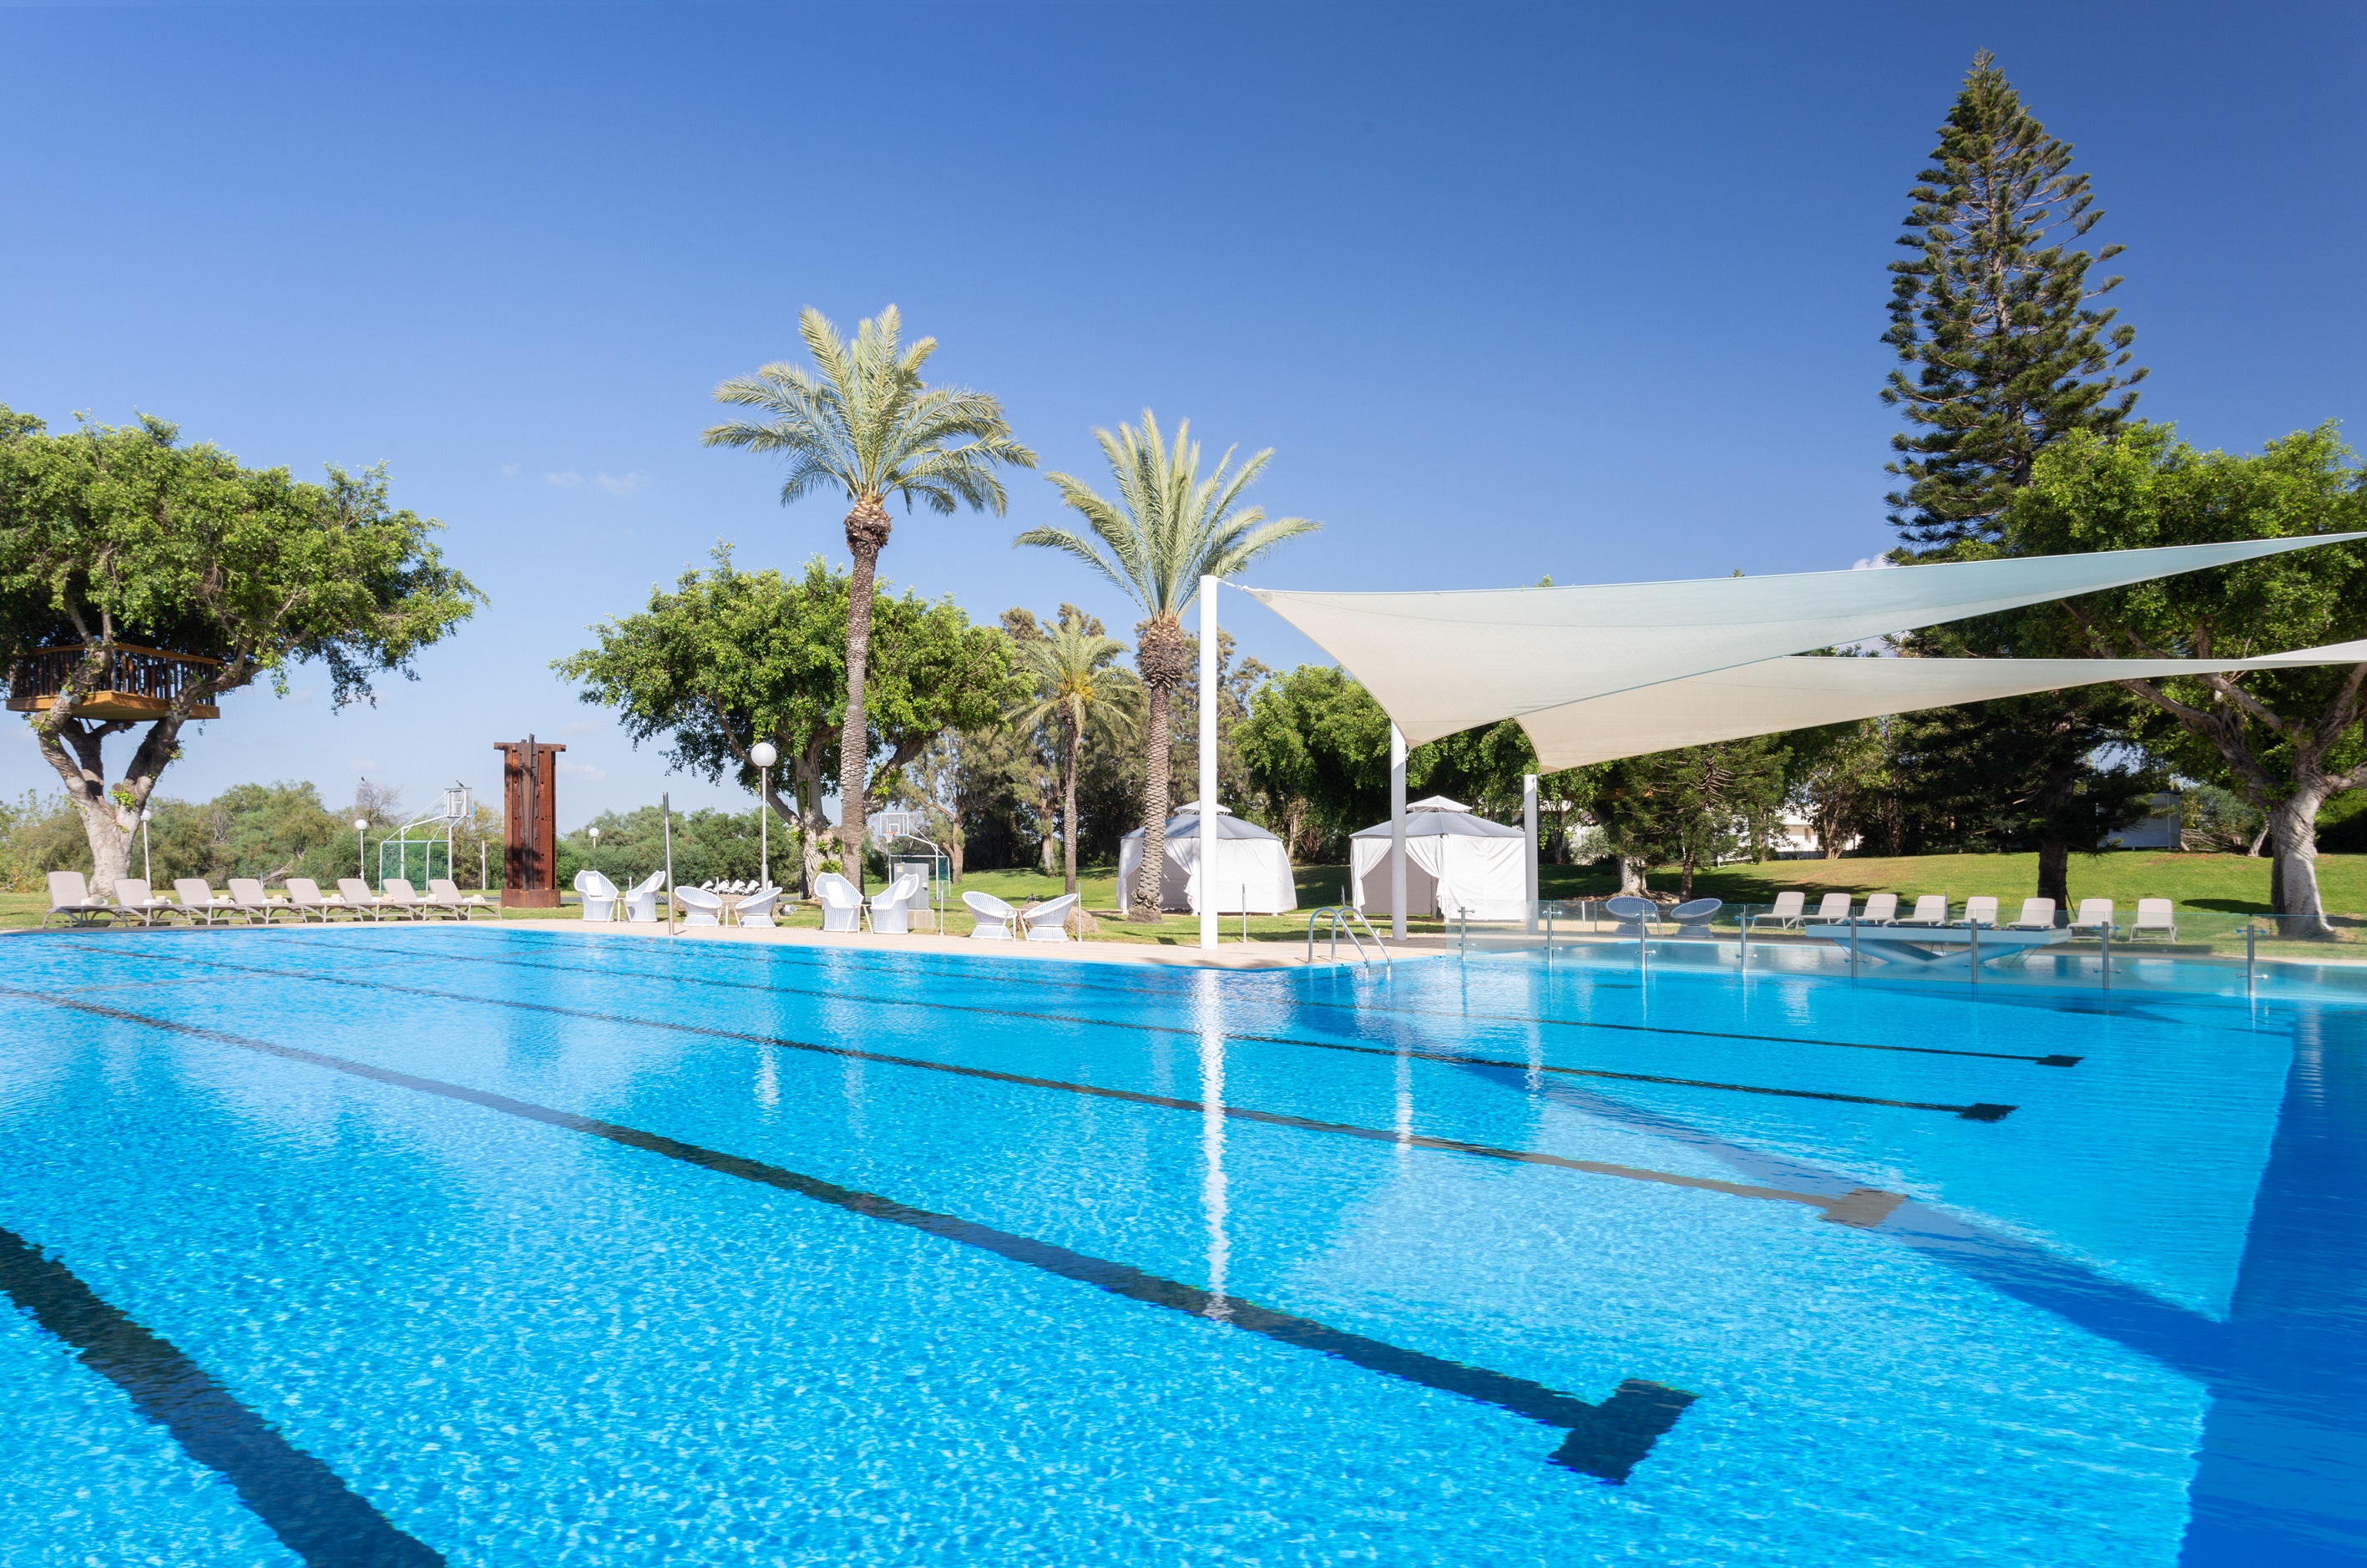 Dan Hotels re-opens Dan Caesarea in Israel - Tourism News Live